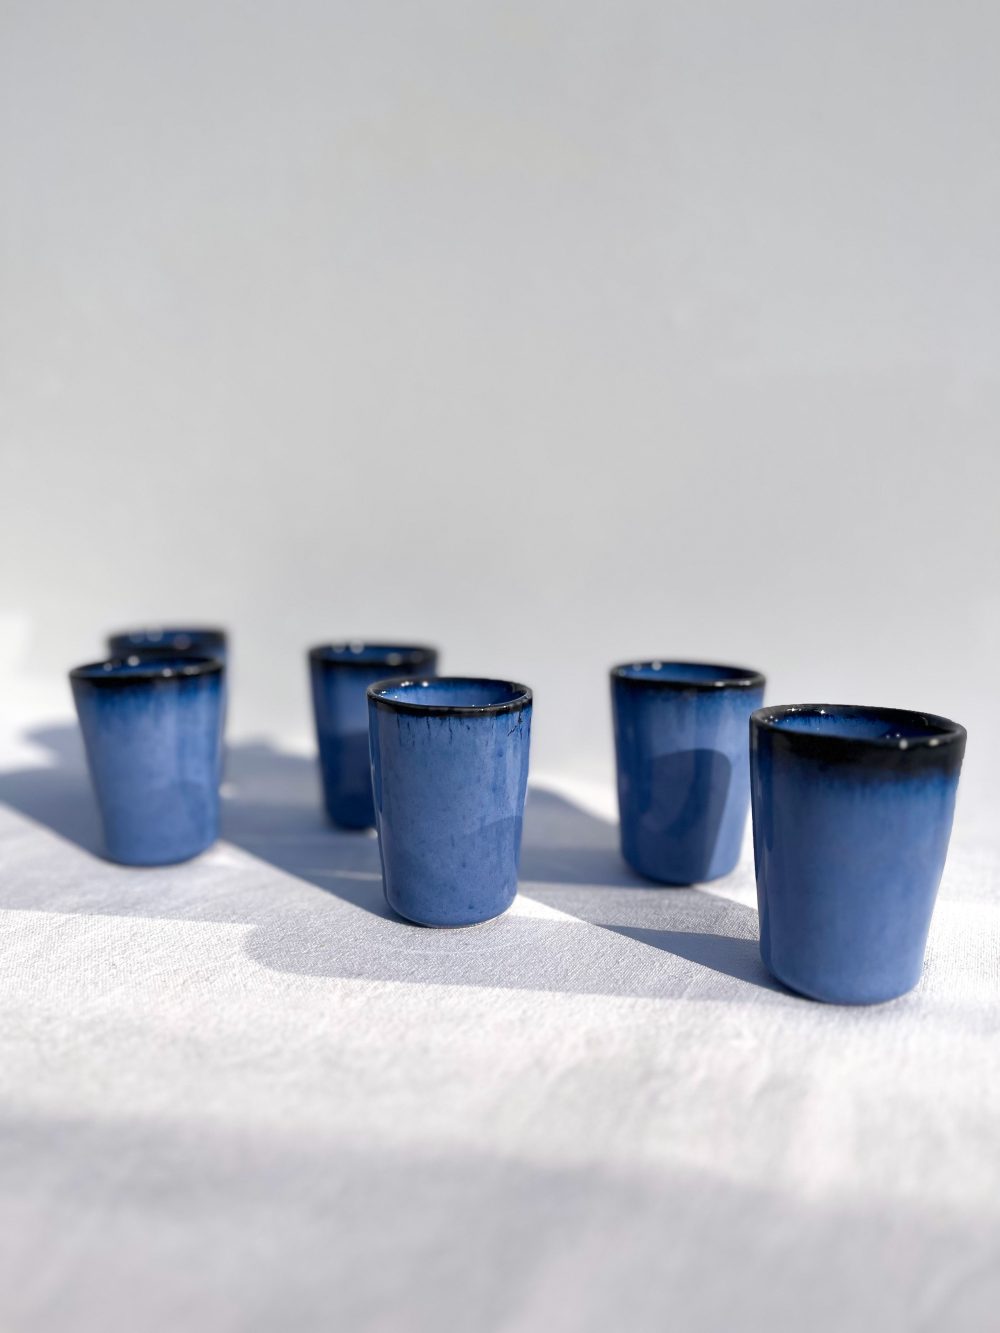 blauwe espresso kopjes - amazonia blue -handgemaakt keramiek - modern portugees servies bij UNRO